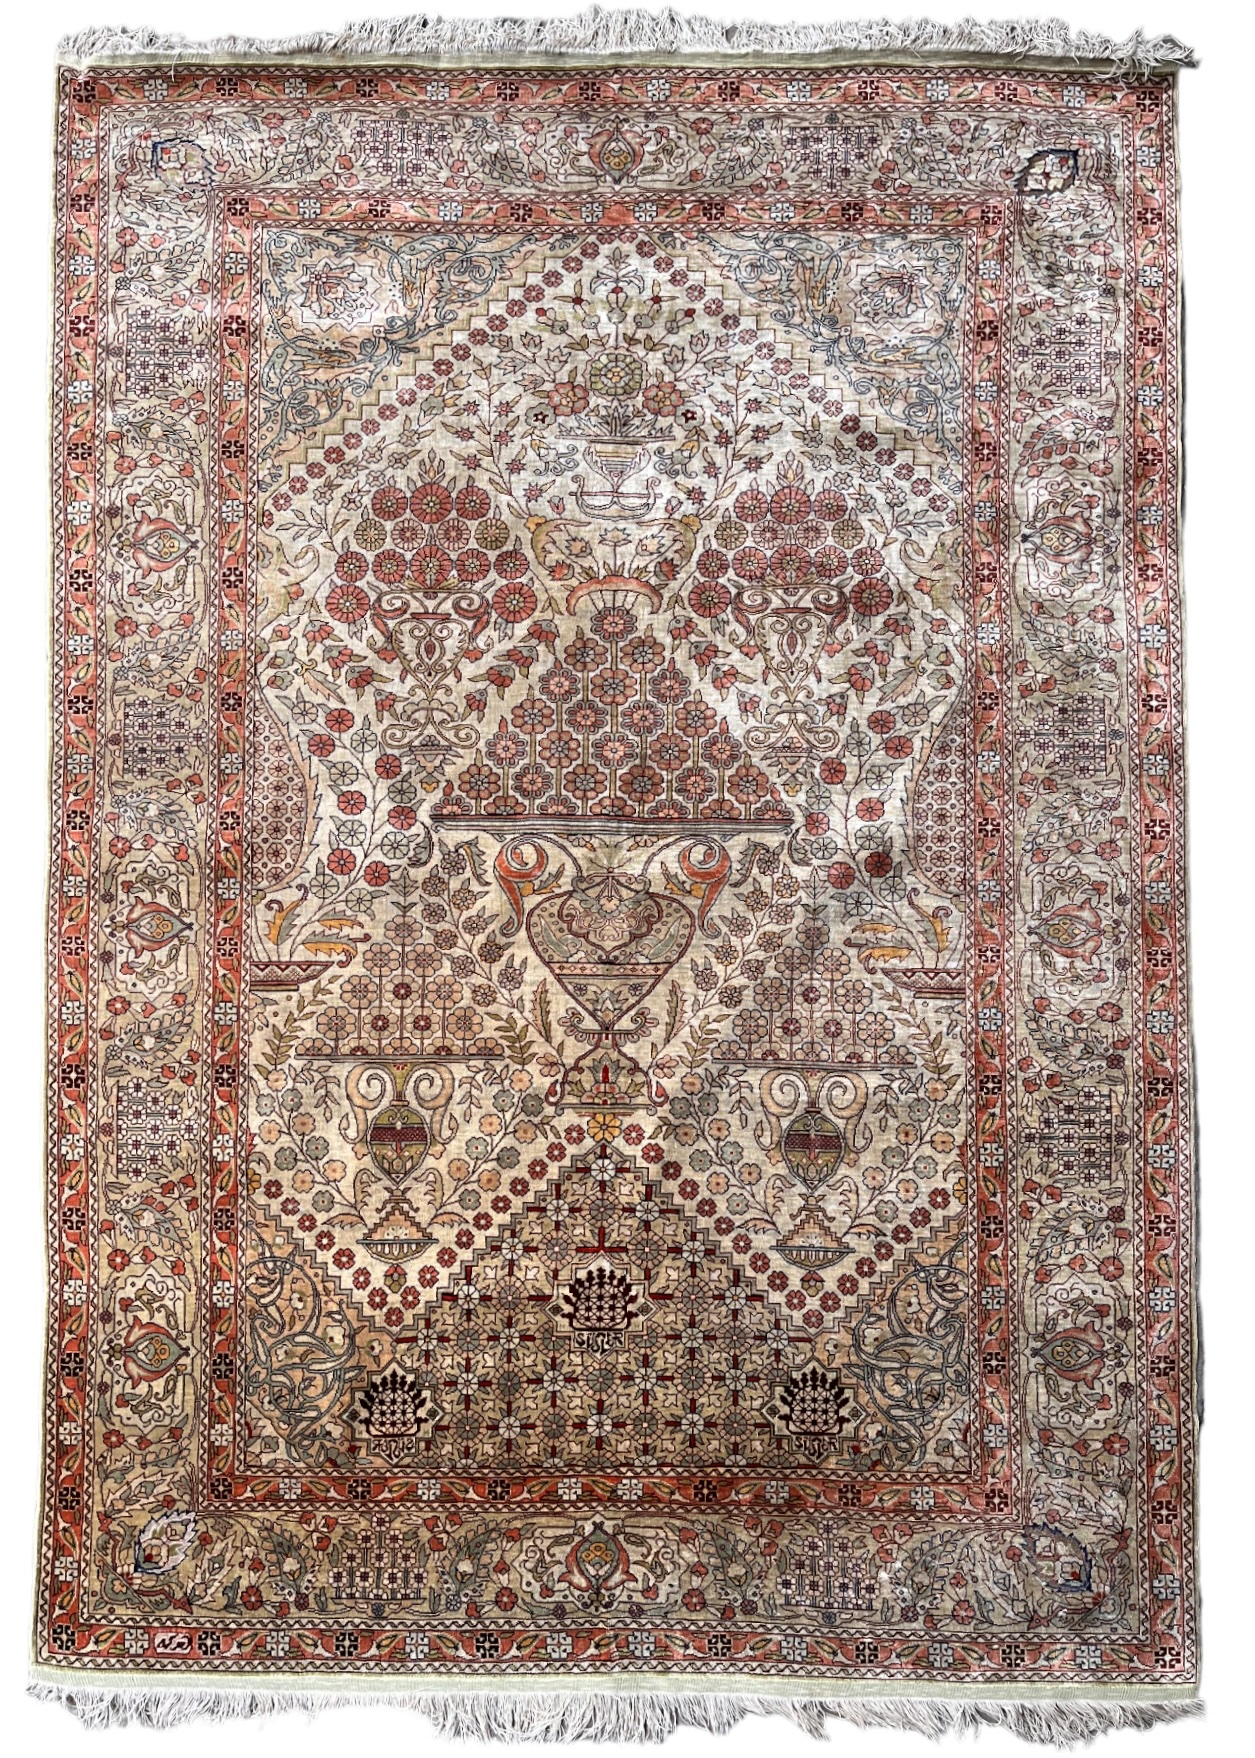 Turkish, A Hereke silk rug